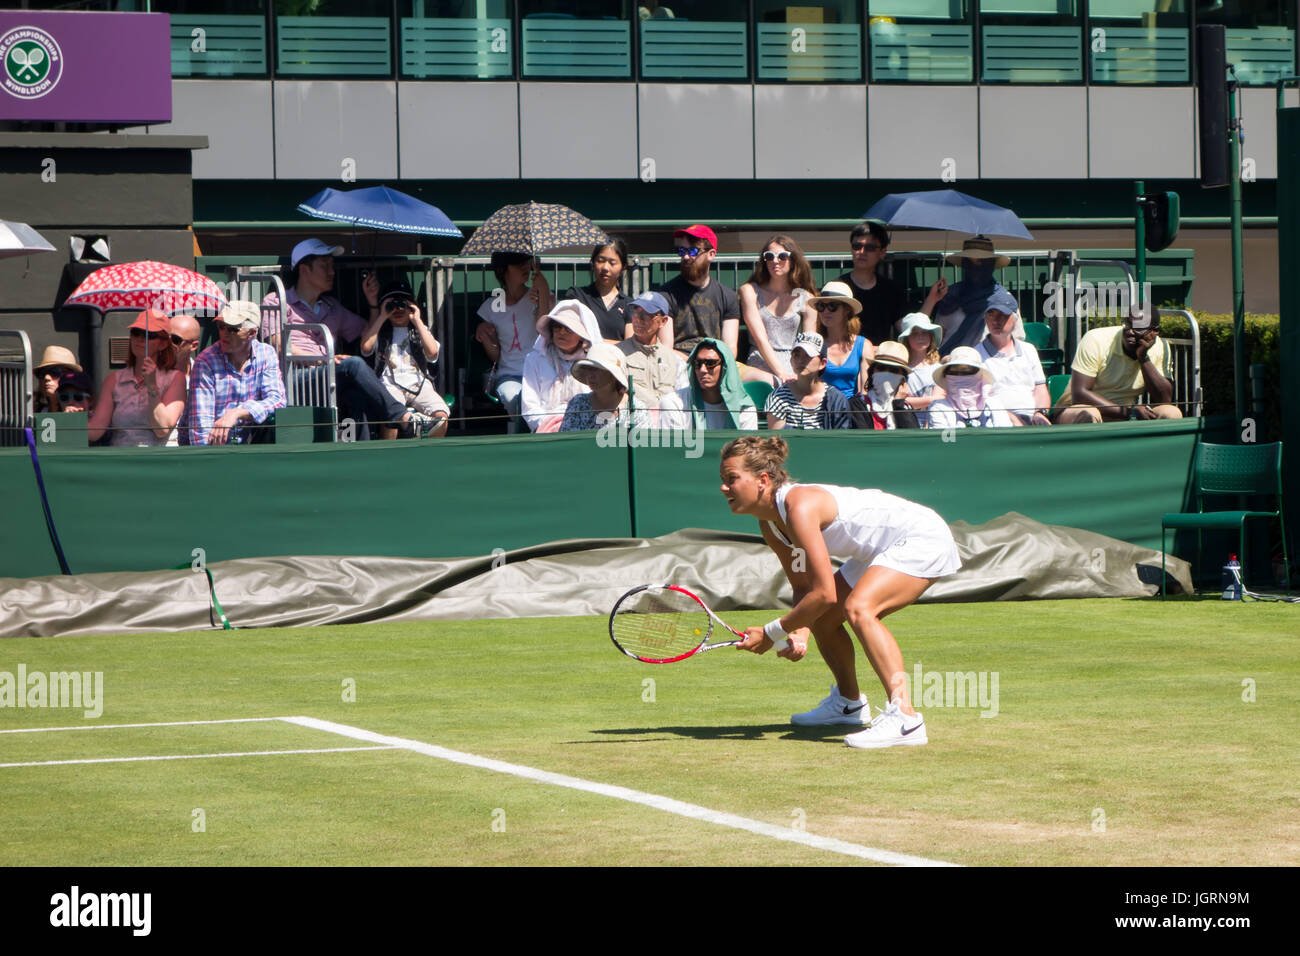 LONDON - JULY 5TH 2017: Barbora Strycova uses her tennis serve return against Naomi Osaka on Day 3 of Wimbledon 2017. Stock Photo